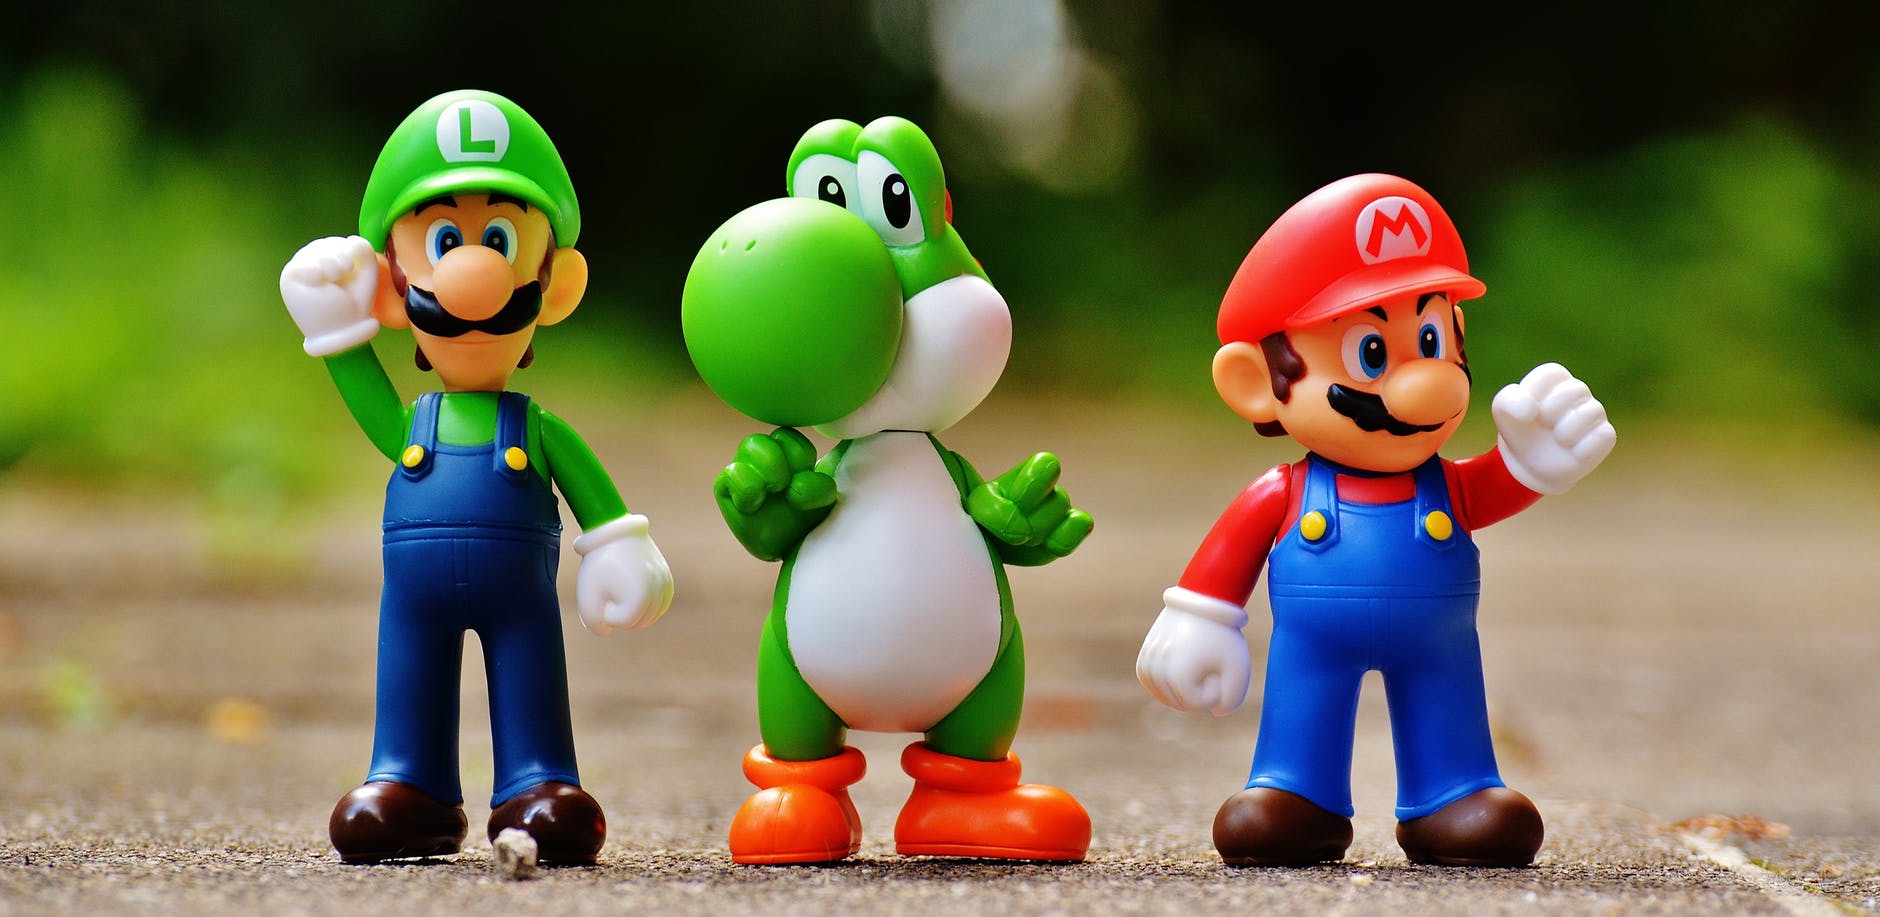 Mario, Luigi and Yoshi figurines from the game "Mario Kart".